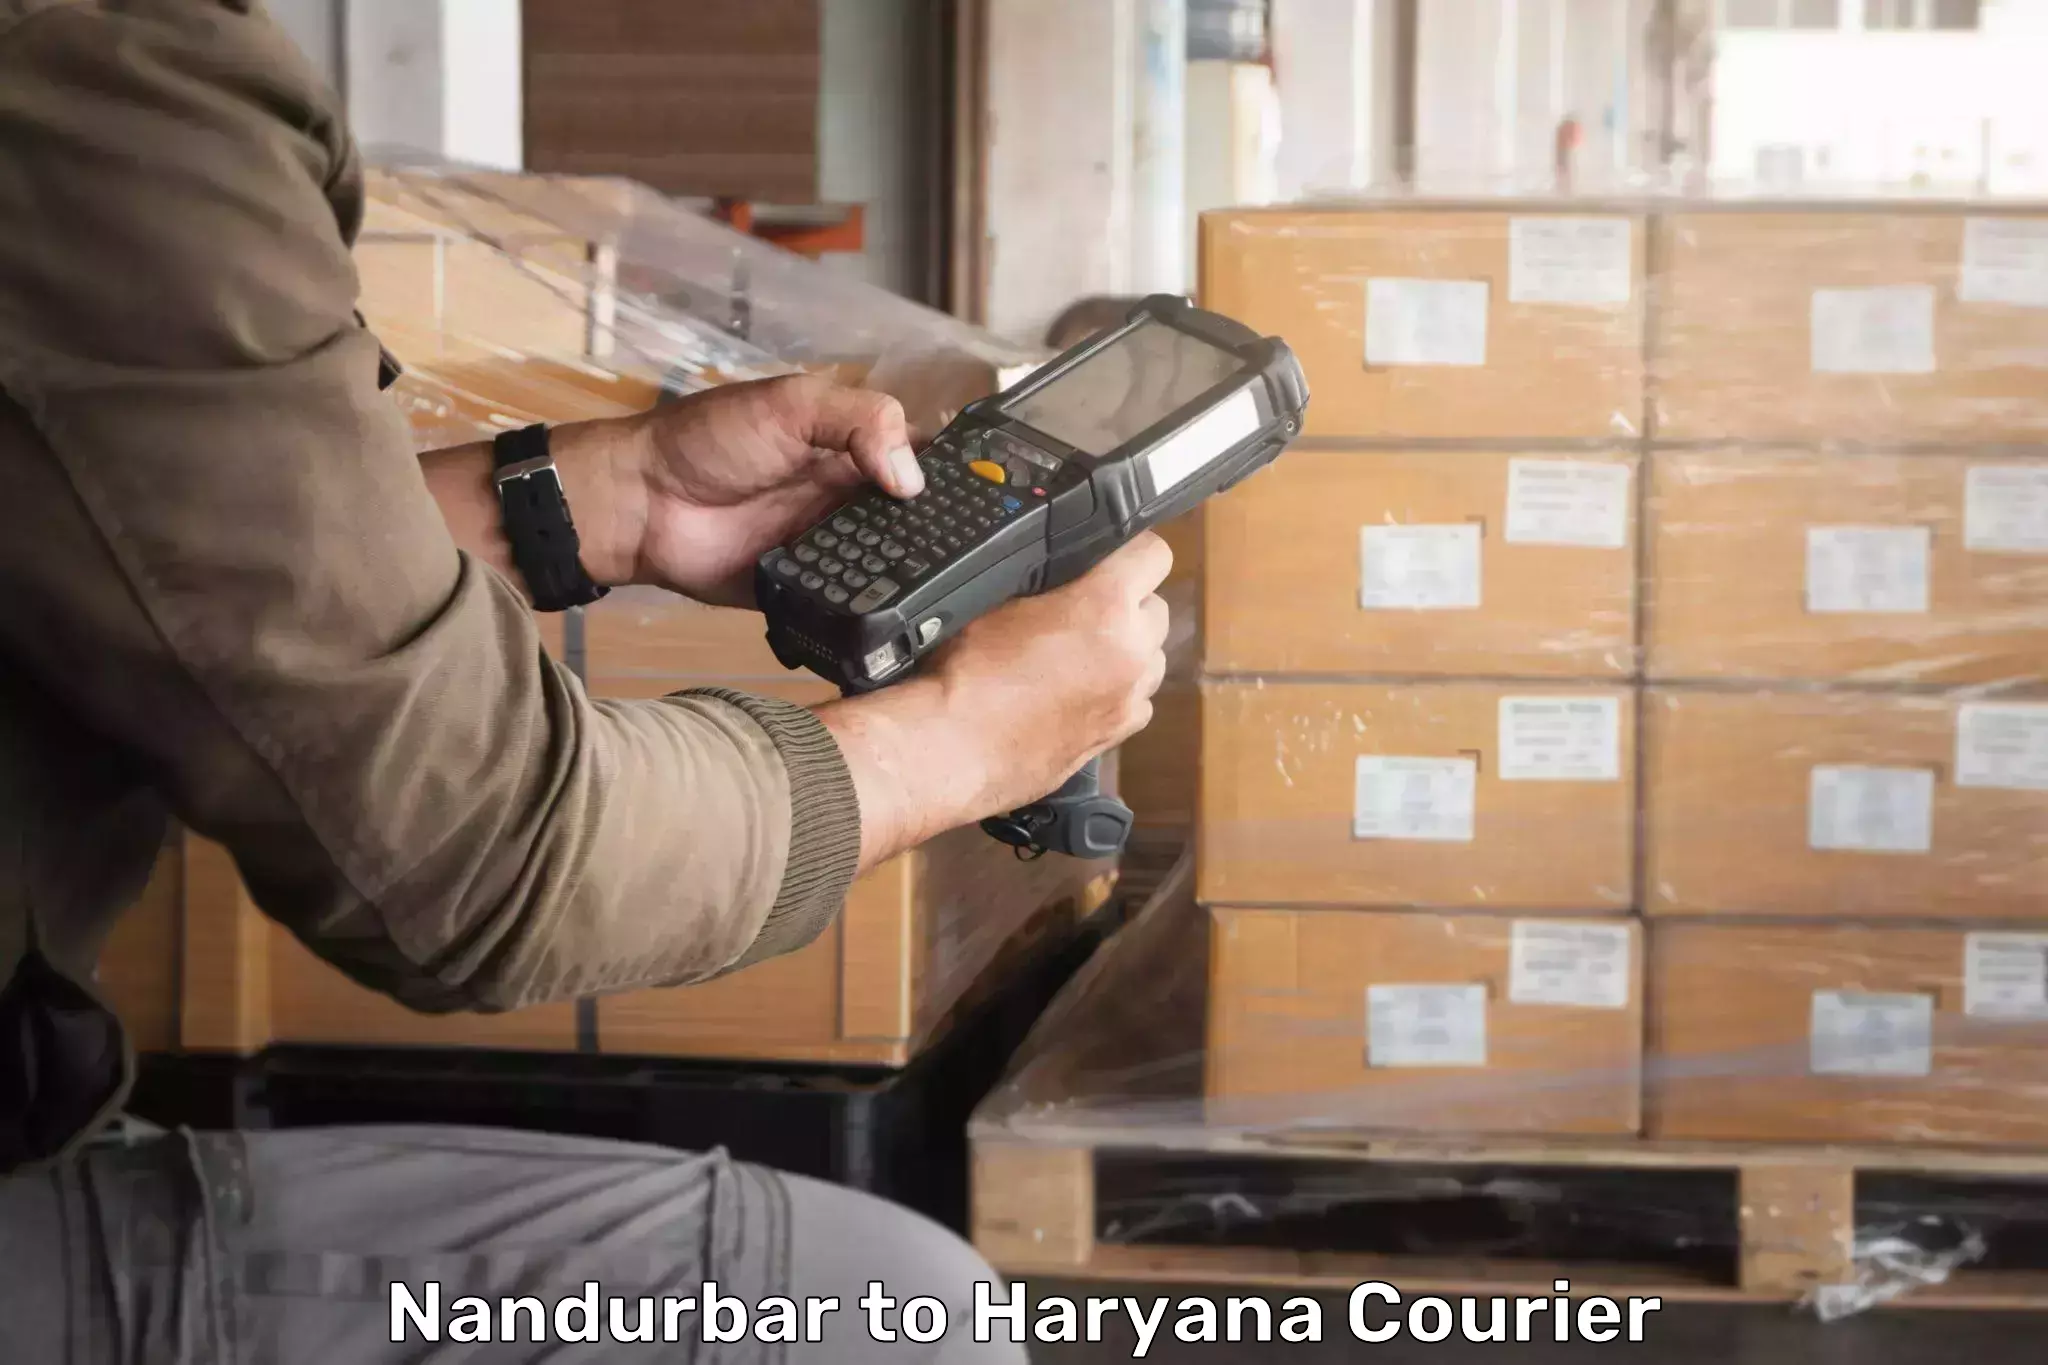 Residential courier service Nandurbar to Gurgaon